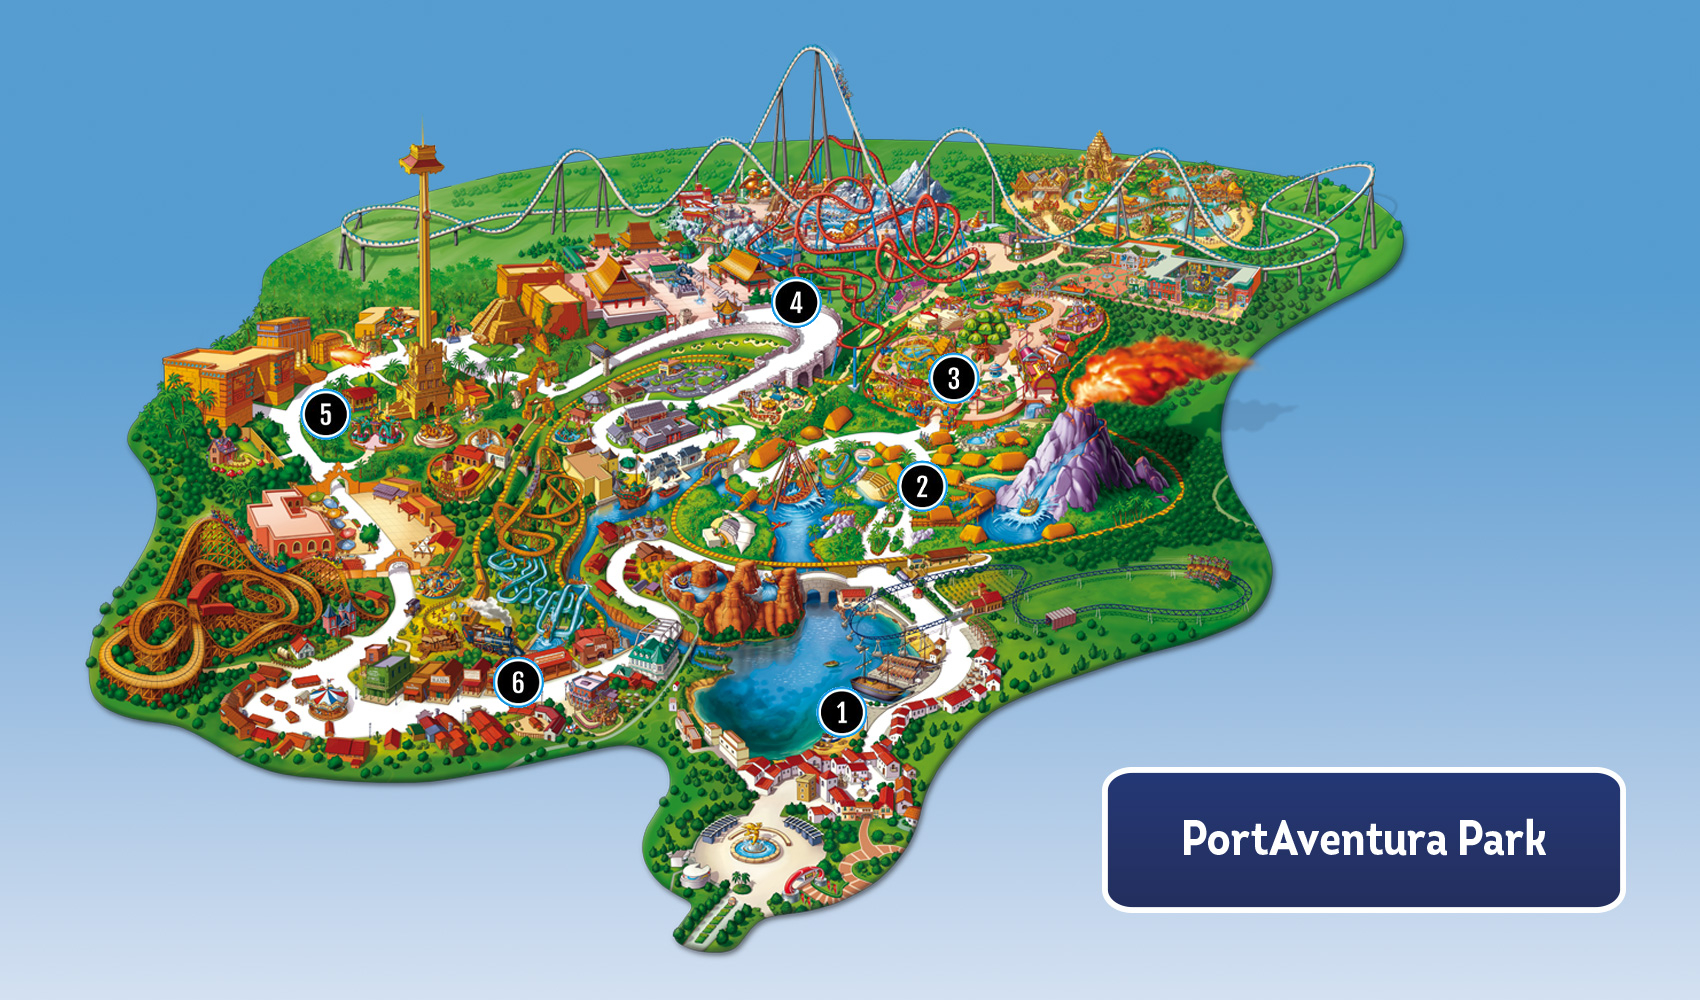 Mapa de PortAventura World